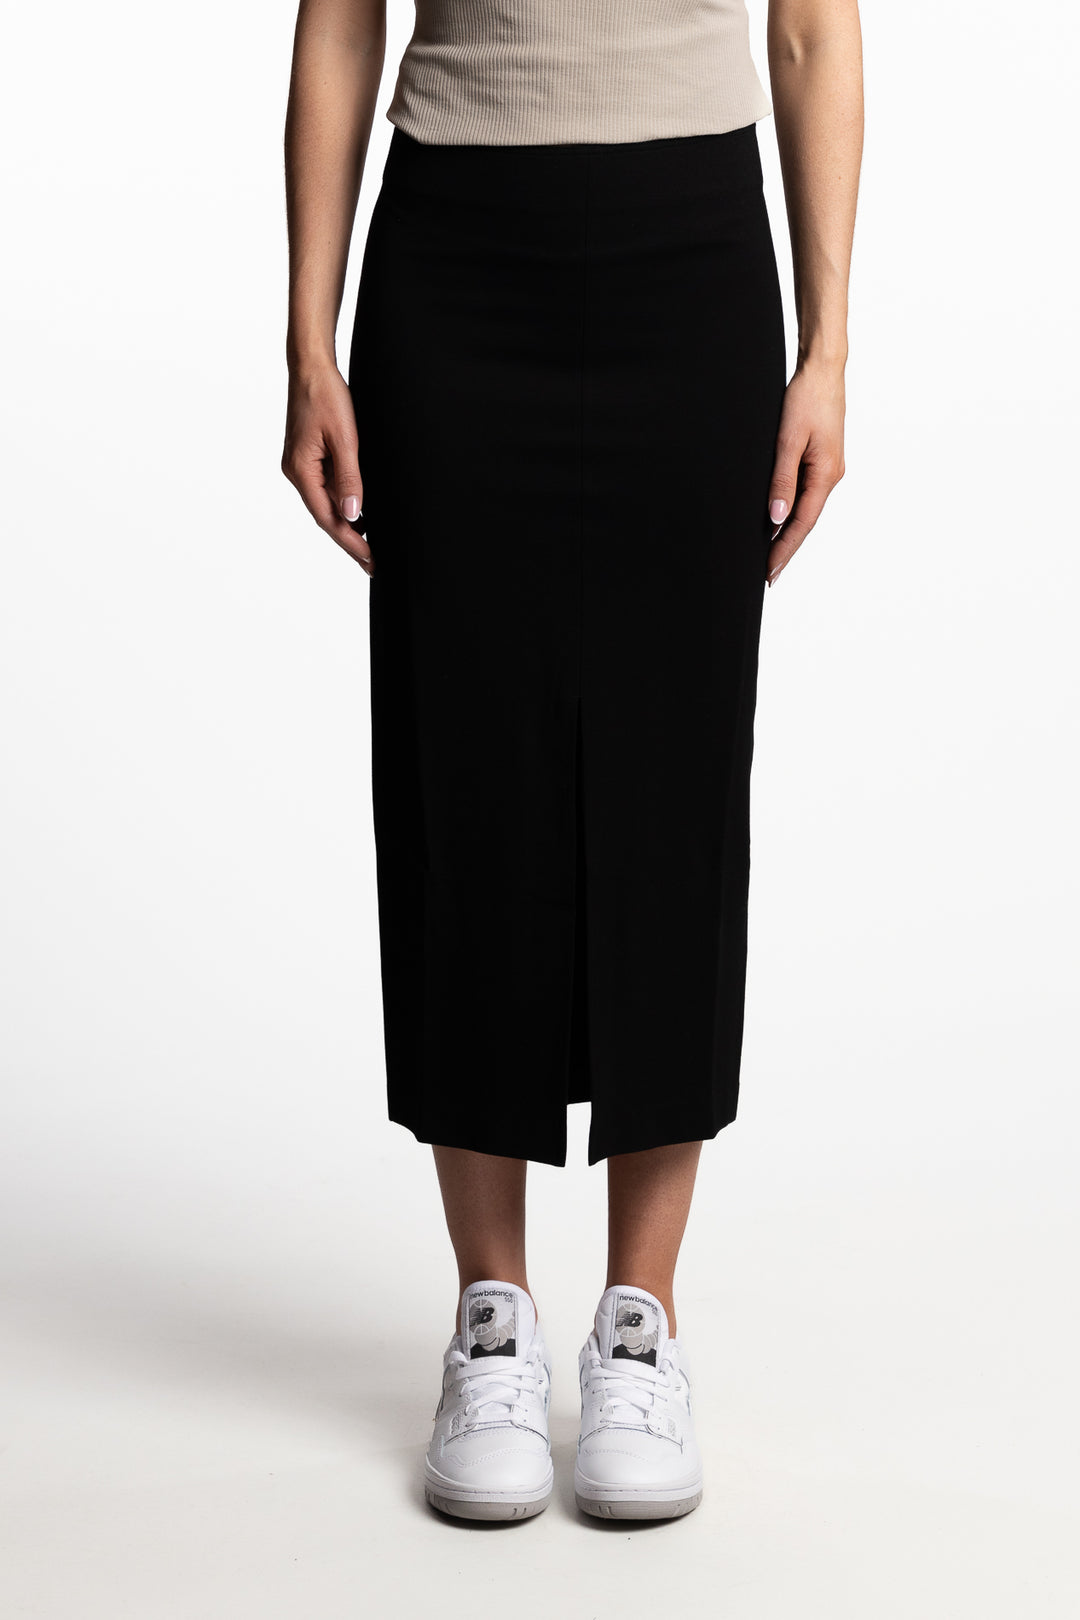 Jersey Pencil Skirt- Black